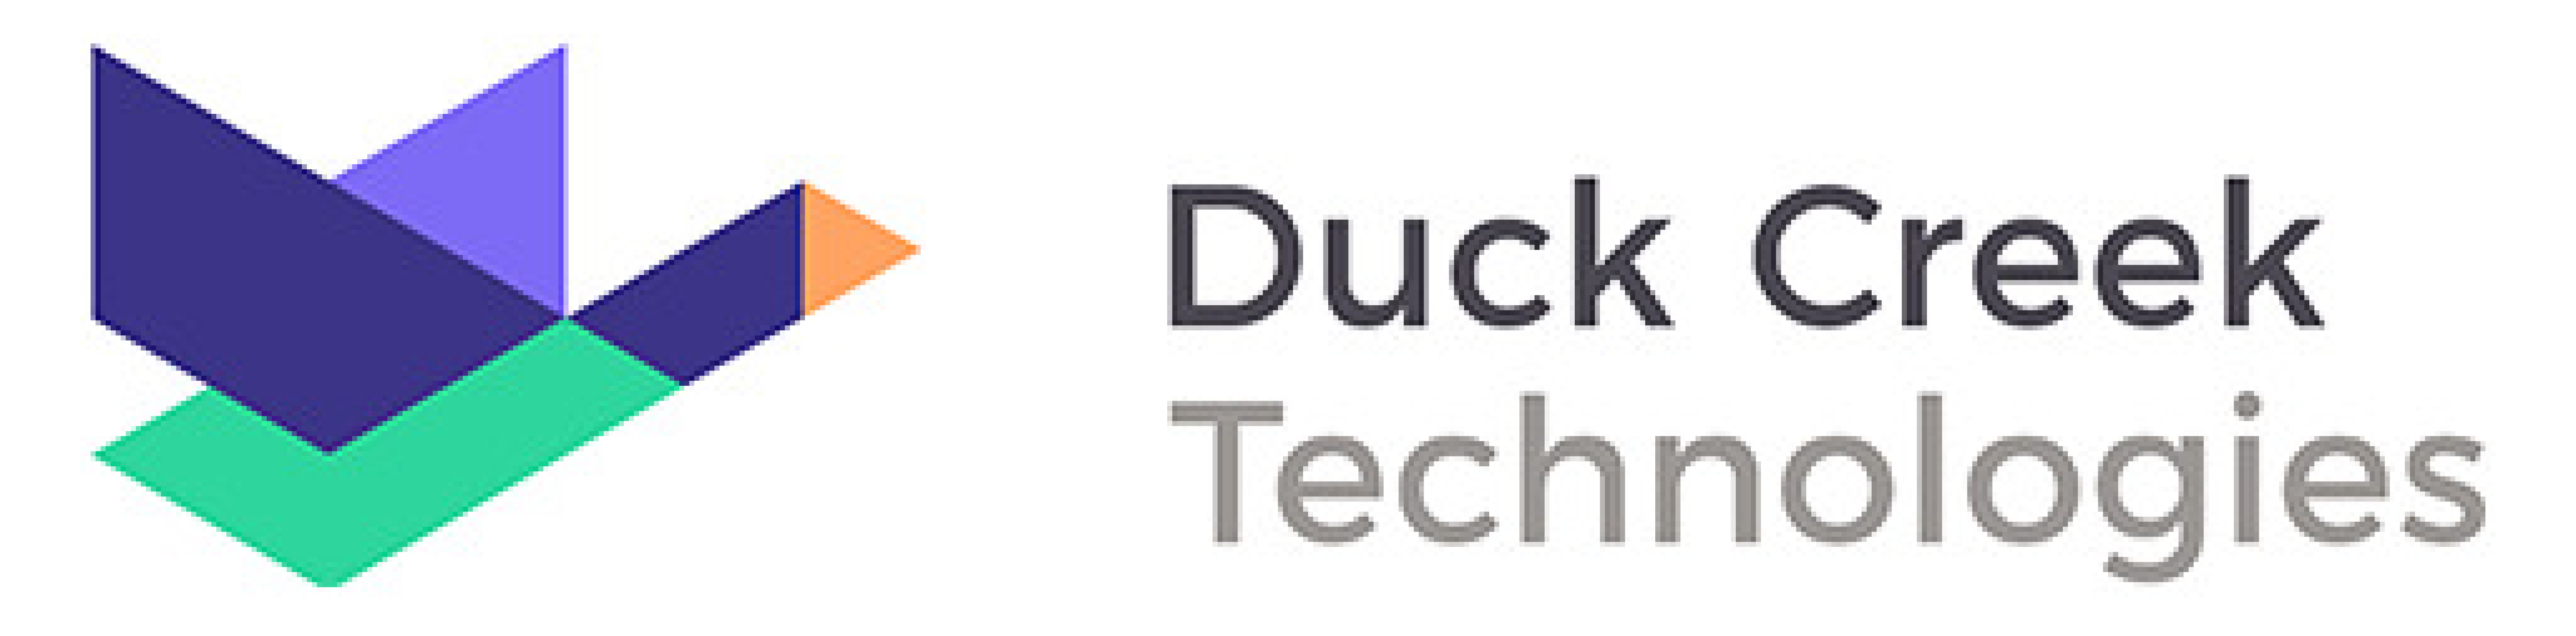 Duck Creek logosu.